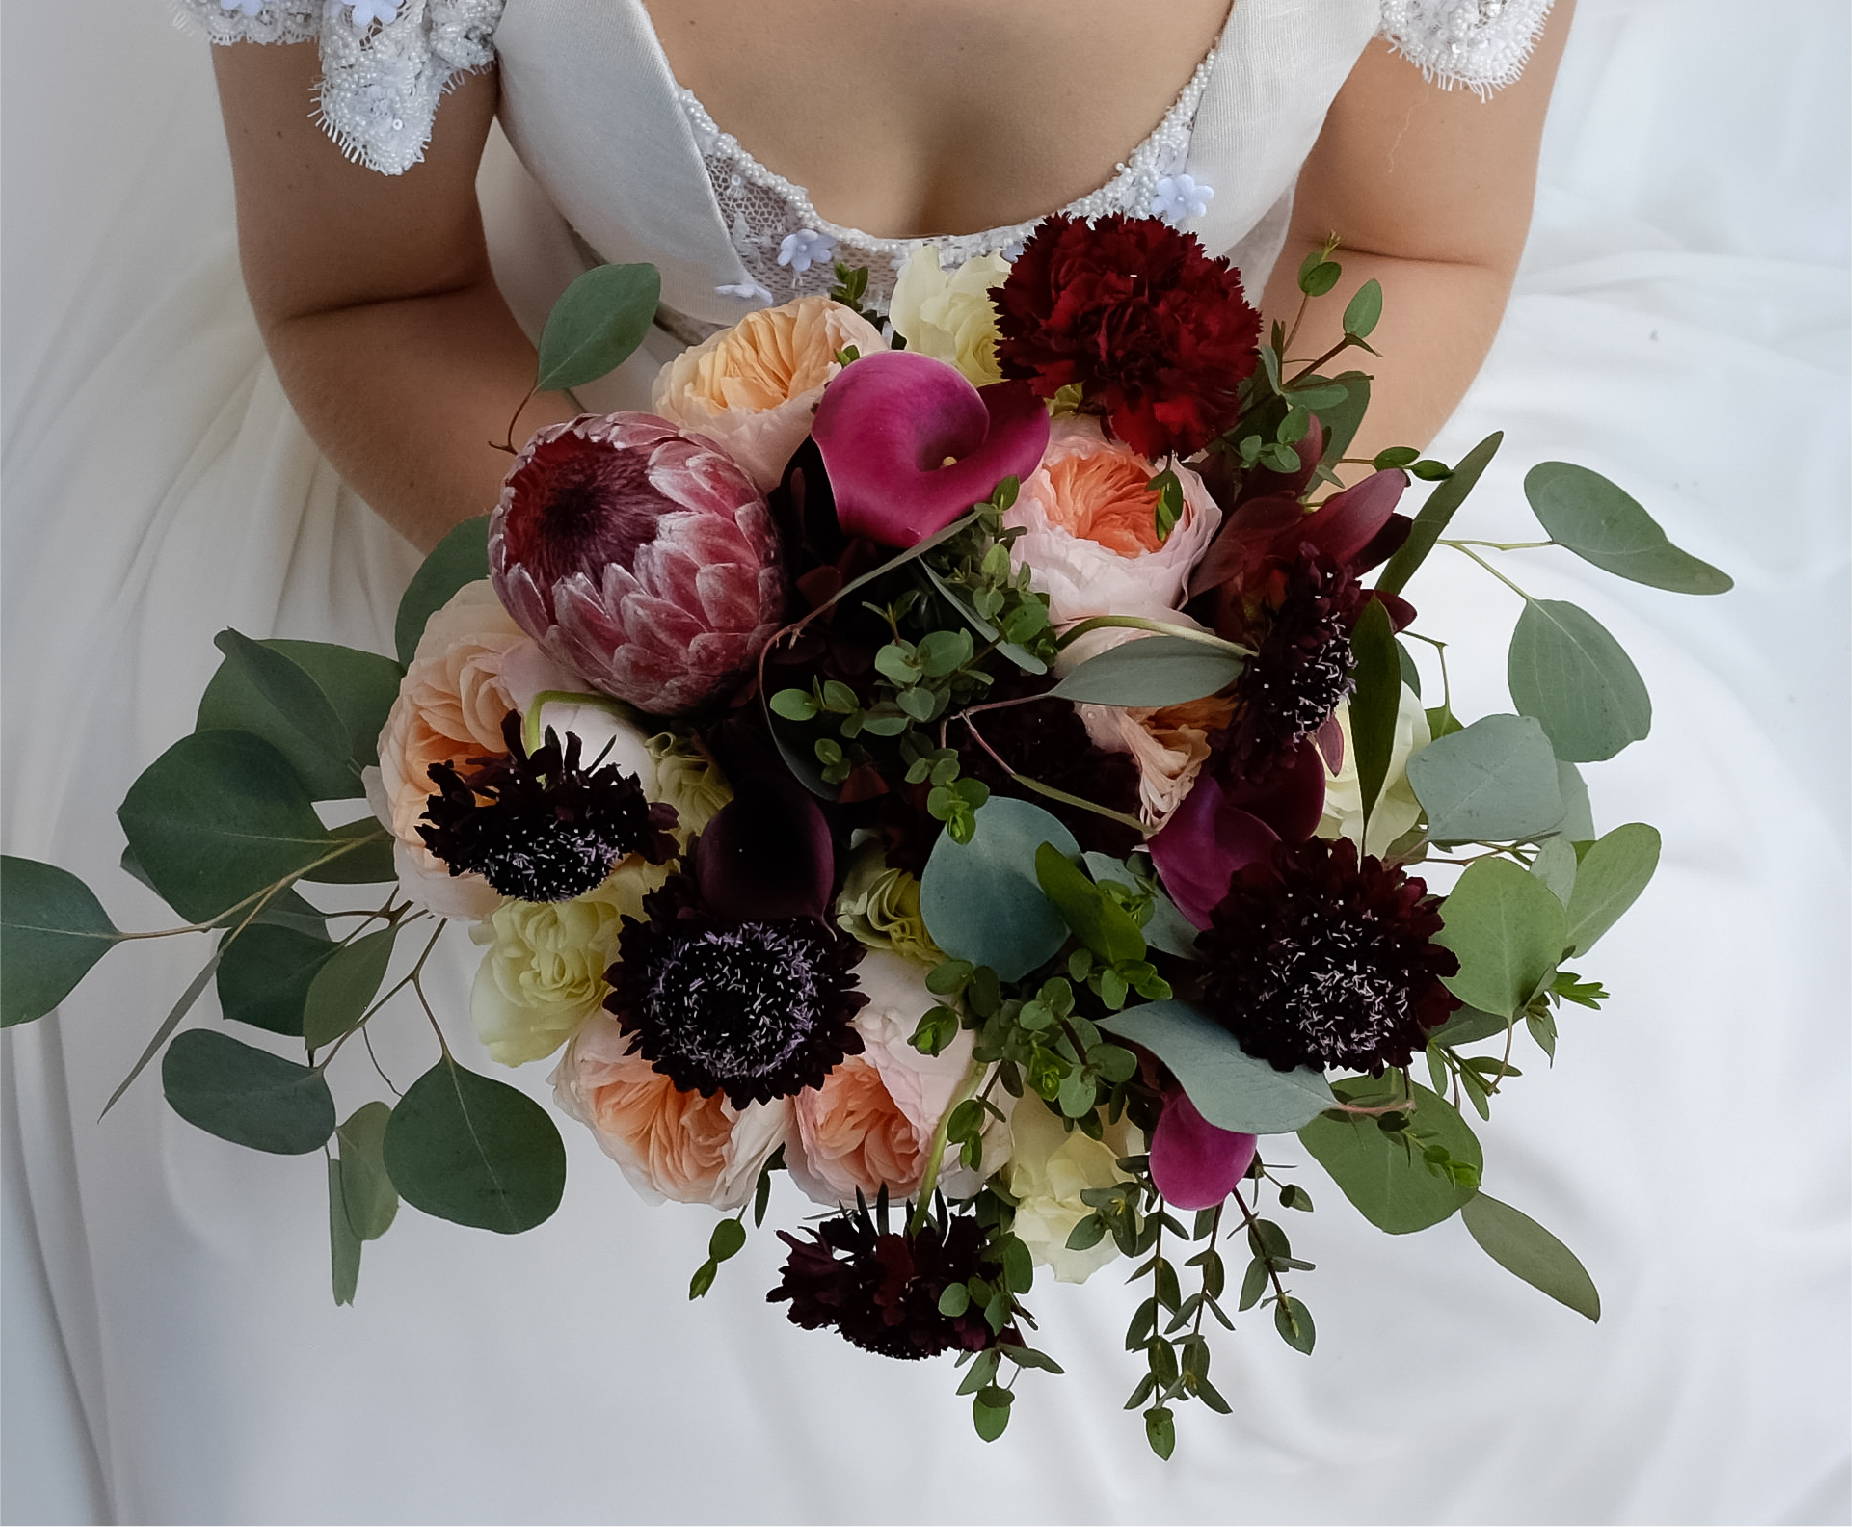 Everyone can use some @jadorelesfleurs & @louisvuitton  Spring wedding  flowers, Luxury flowers, Fresh flower delivery